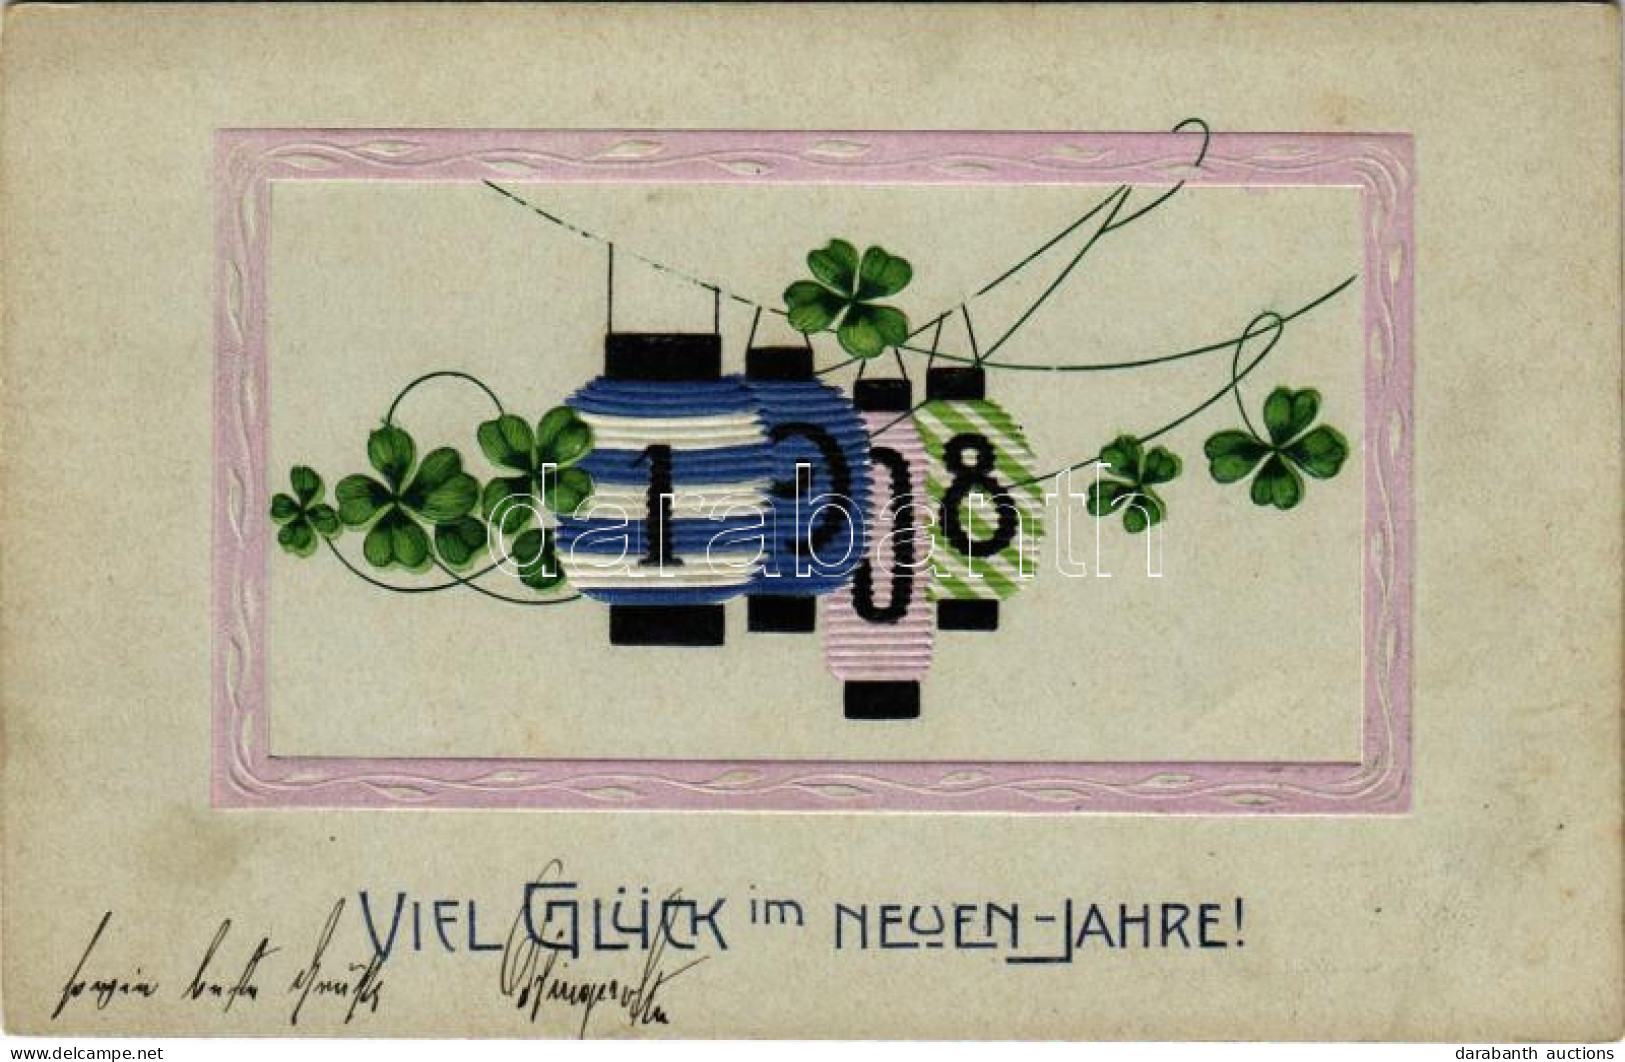 T2/T3 1907 Viel Glück Im Neuen Jahre / New Year Greeting Art Postcard With Clovers. Emb. Litho (fl) - Unclassified